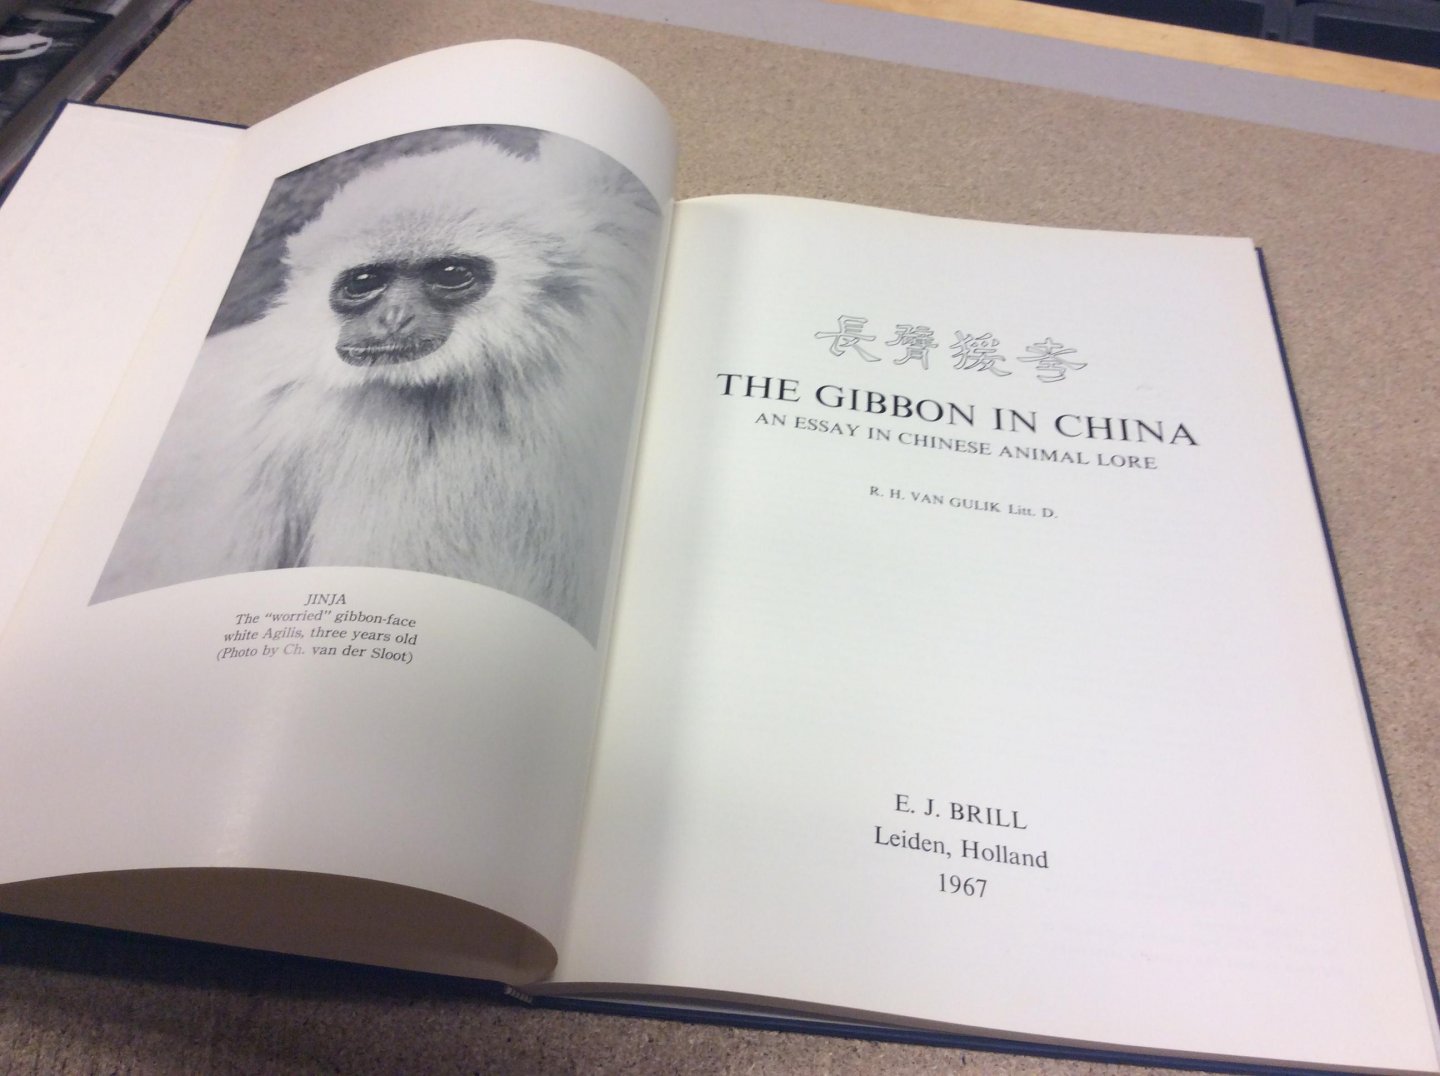 Gulik, R.H. Van Gulik Litt. D. - The Gibbon in China